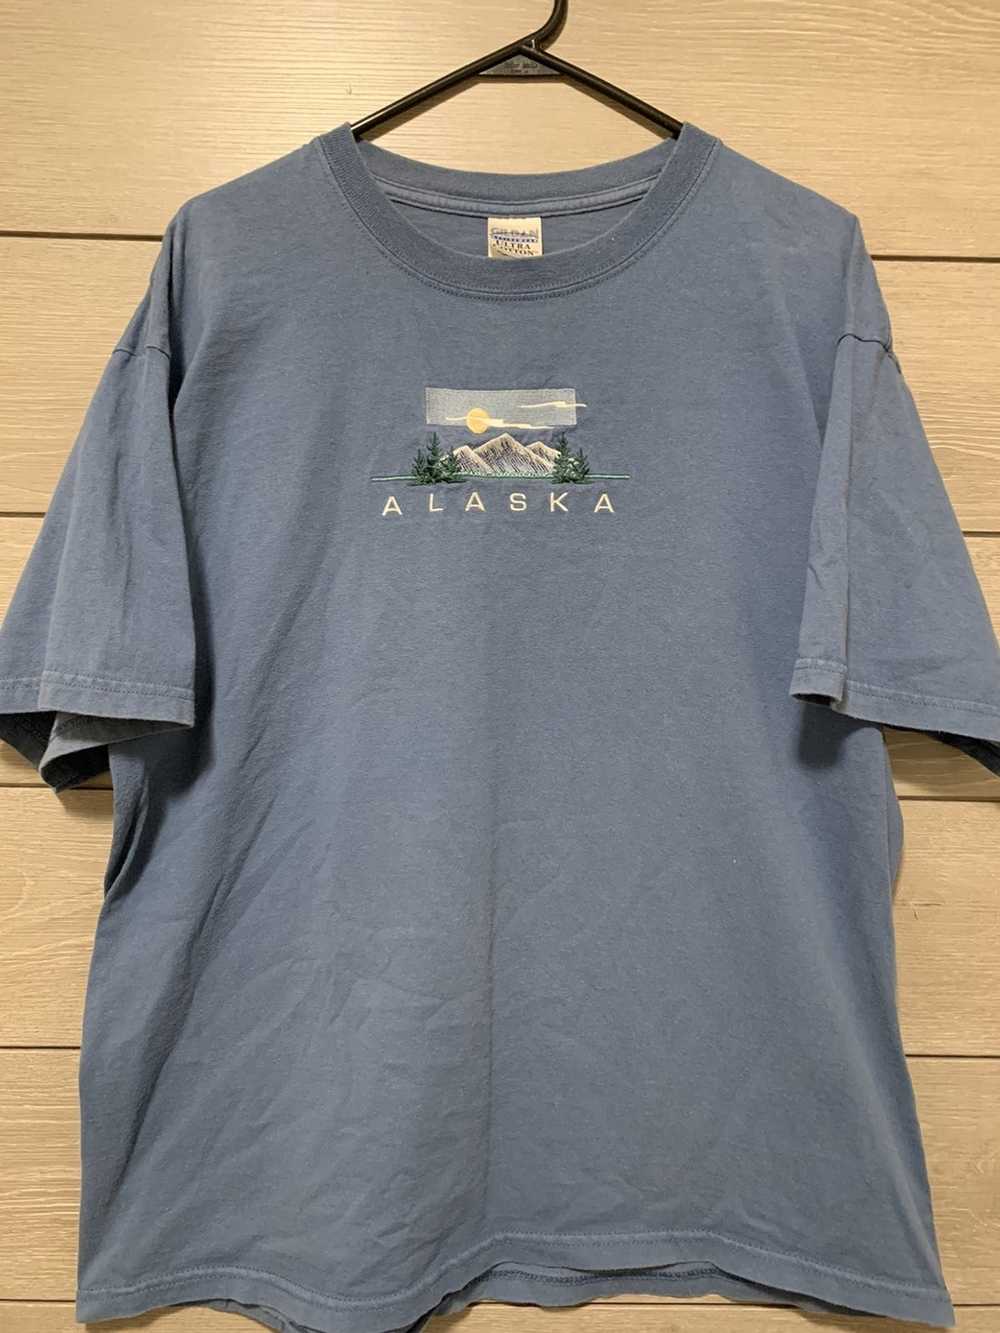 Vintage Vintage Alaska T-Shirt - image 1